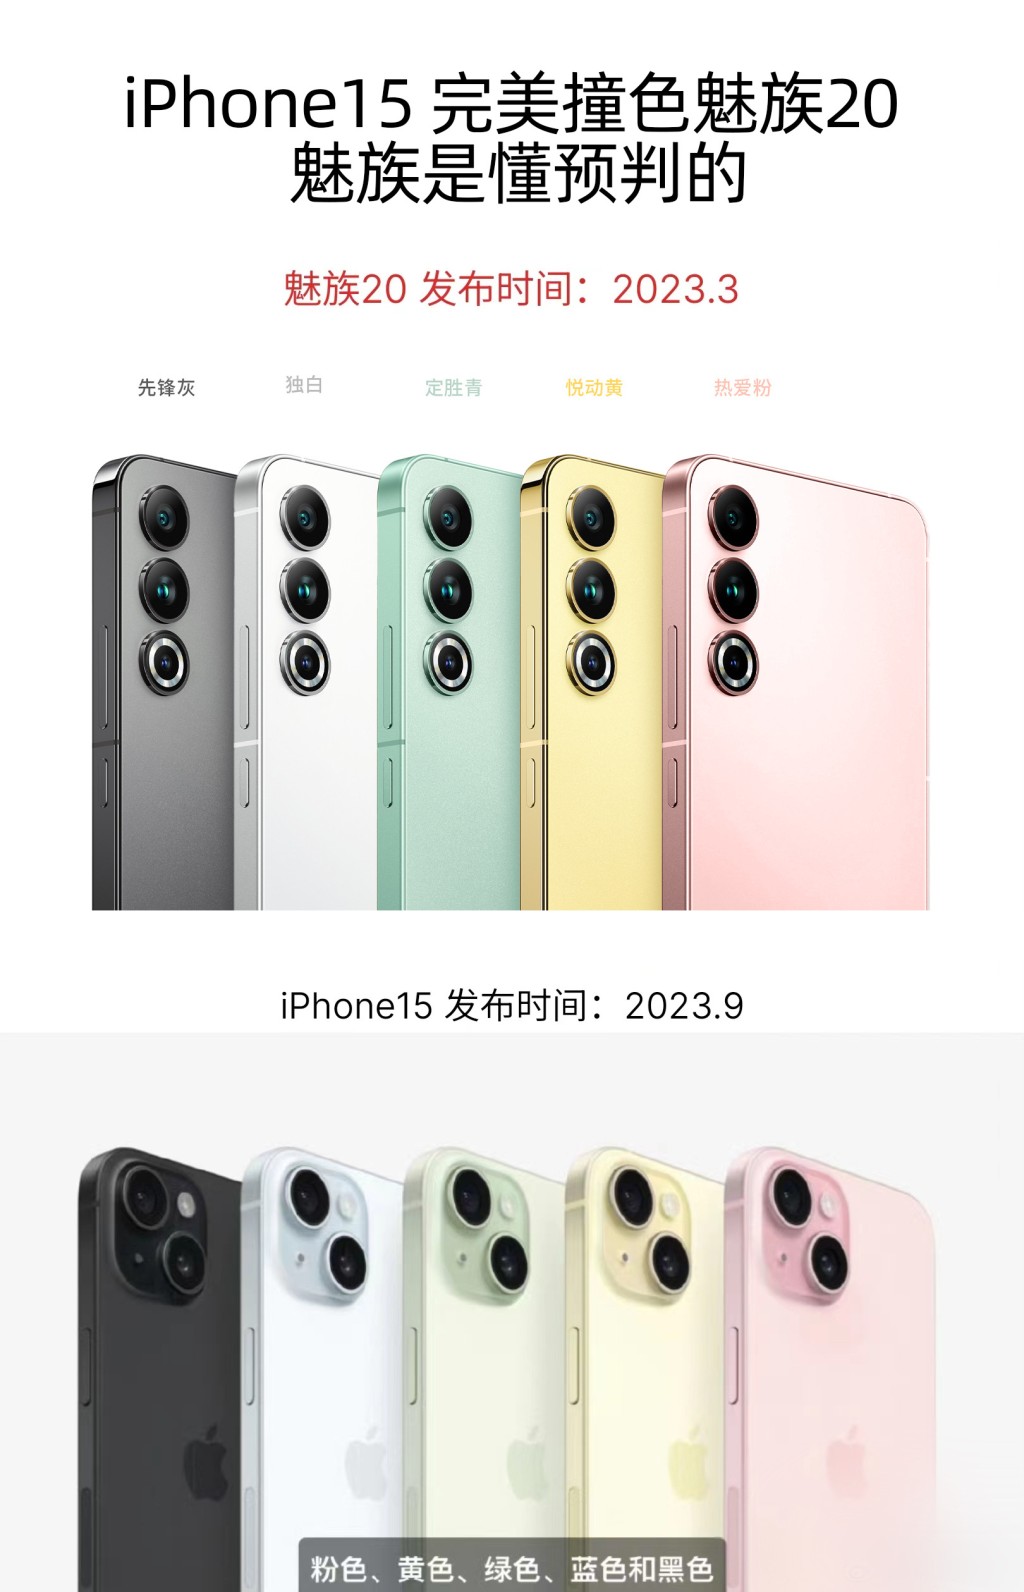 iPhone 15 和较早前推出的魅族20手机「完美撞色」。